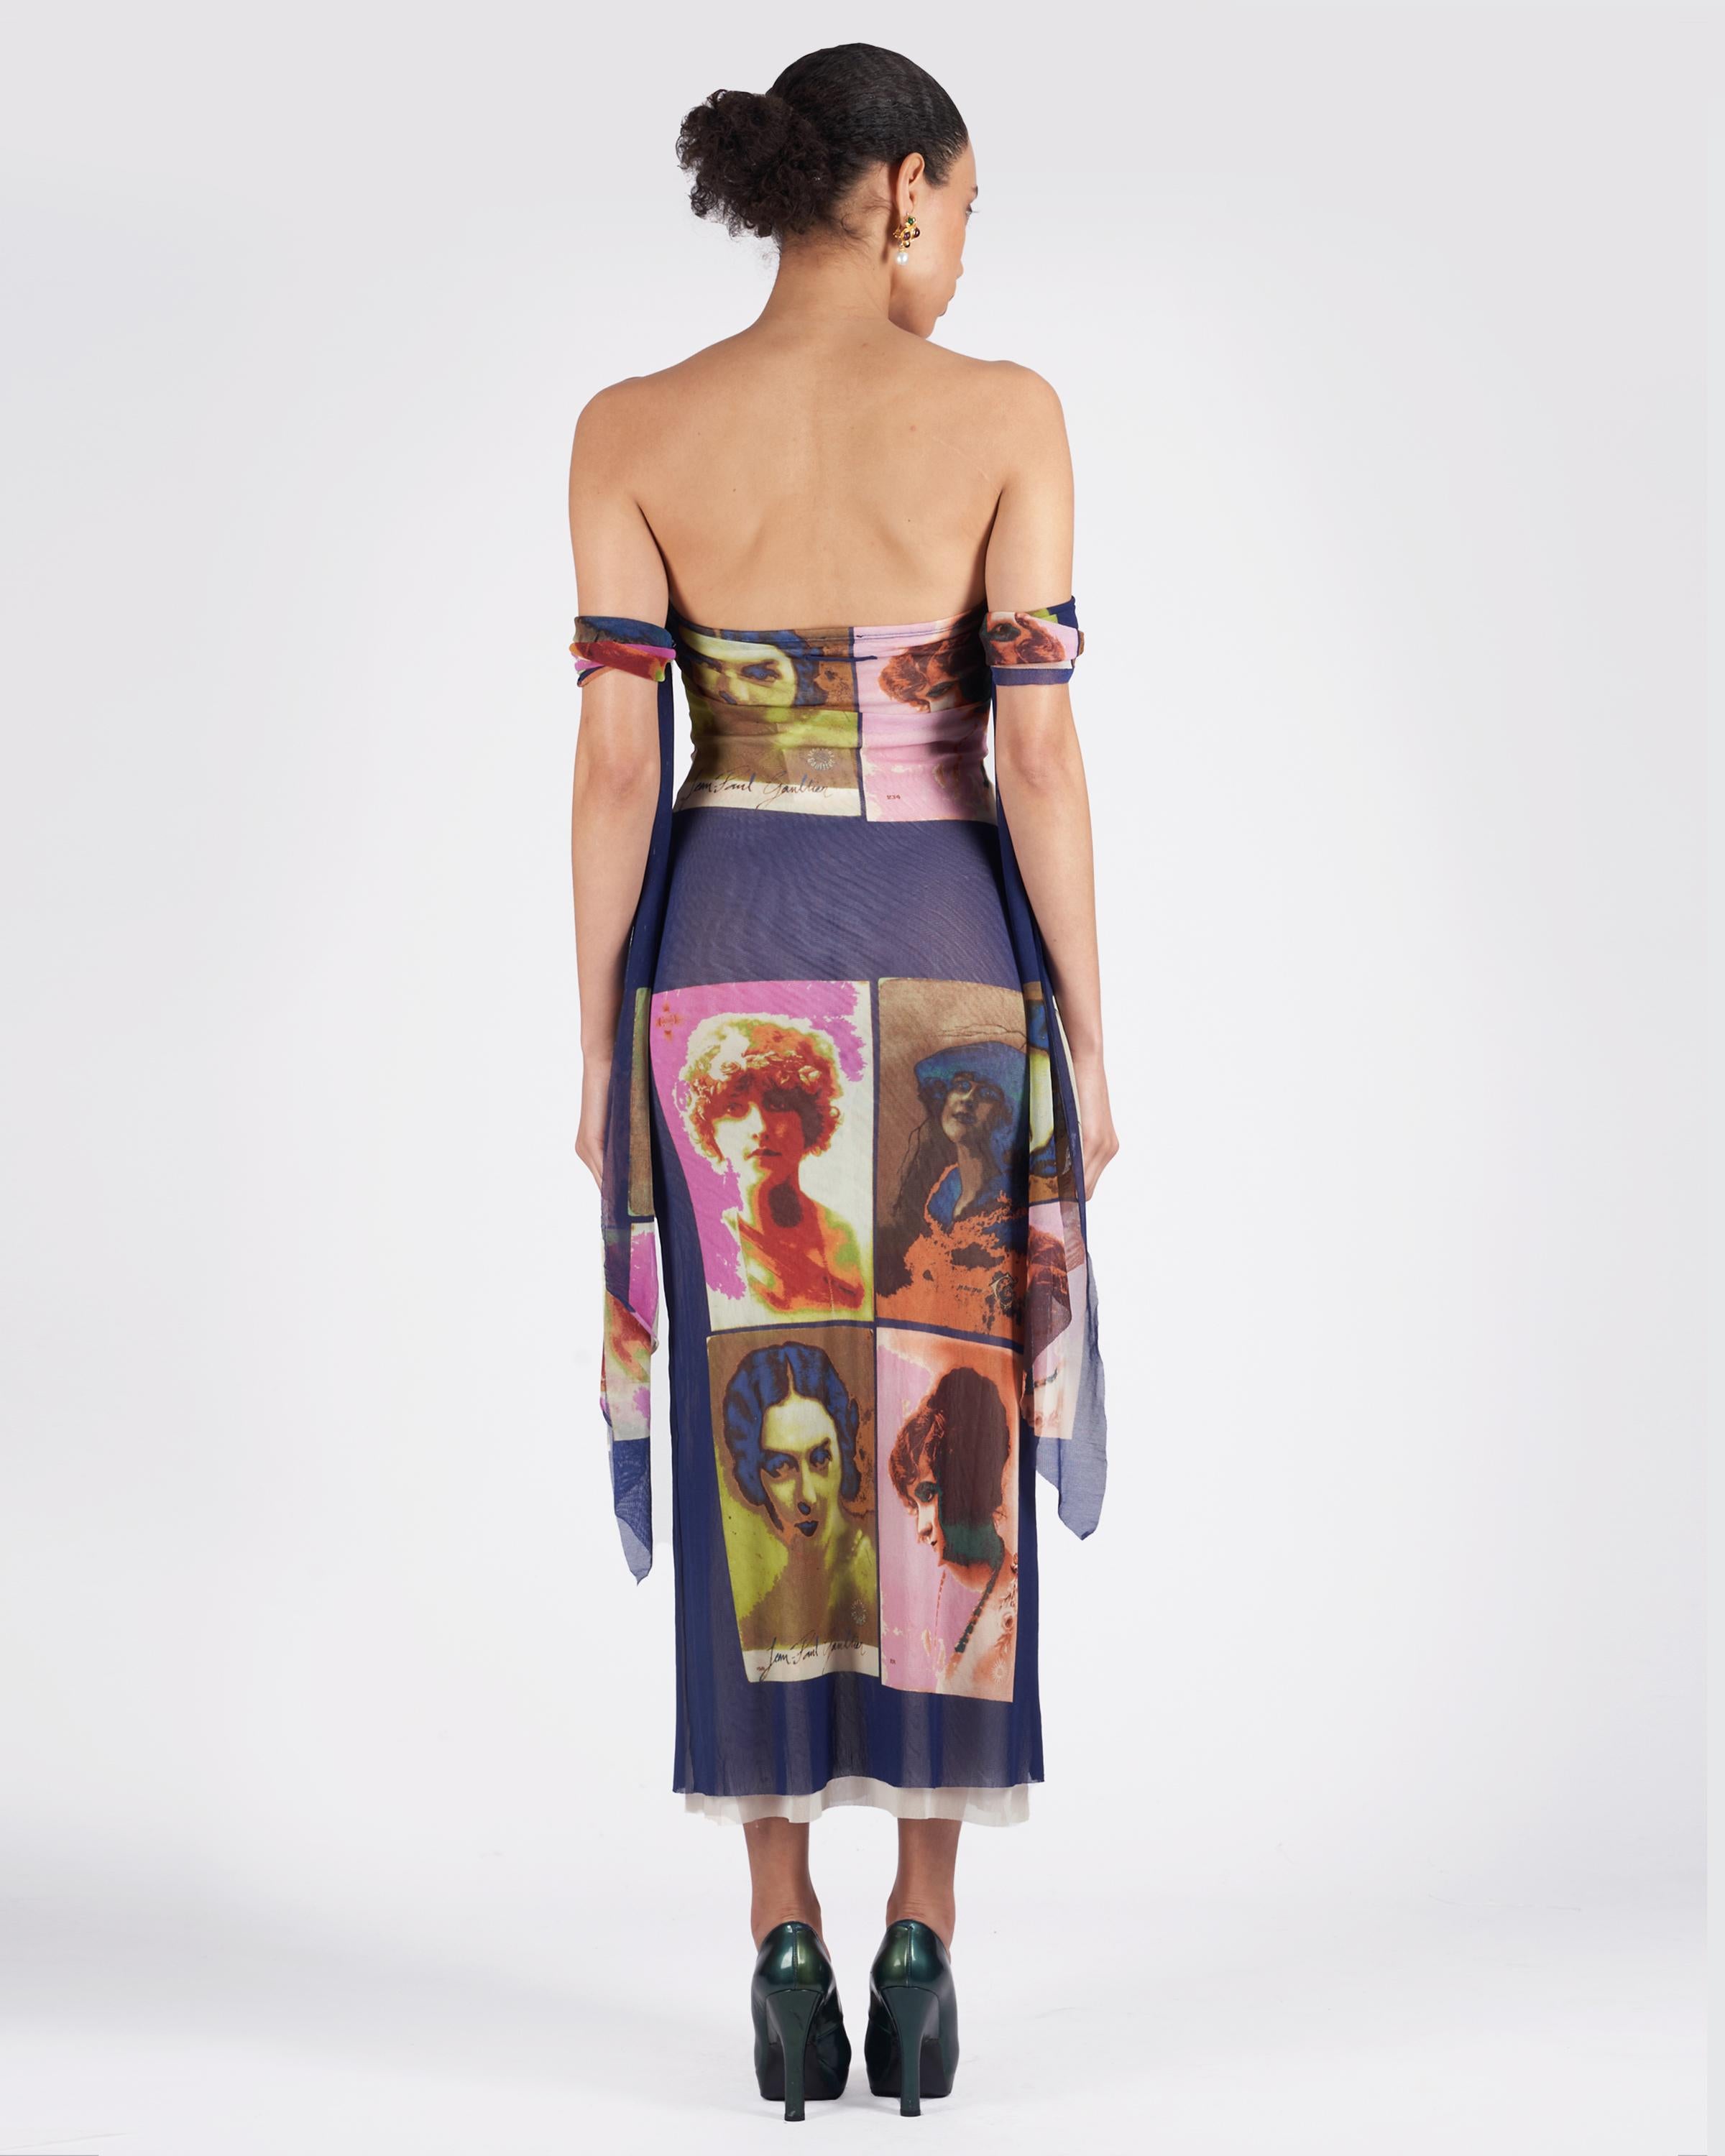 Jean Paul Gaultier S/S 2002 Portrait Dress For Sale 3